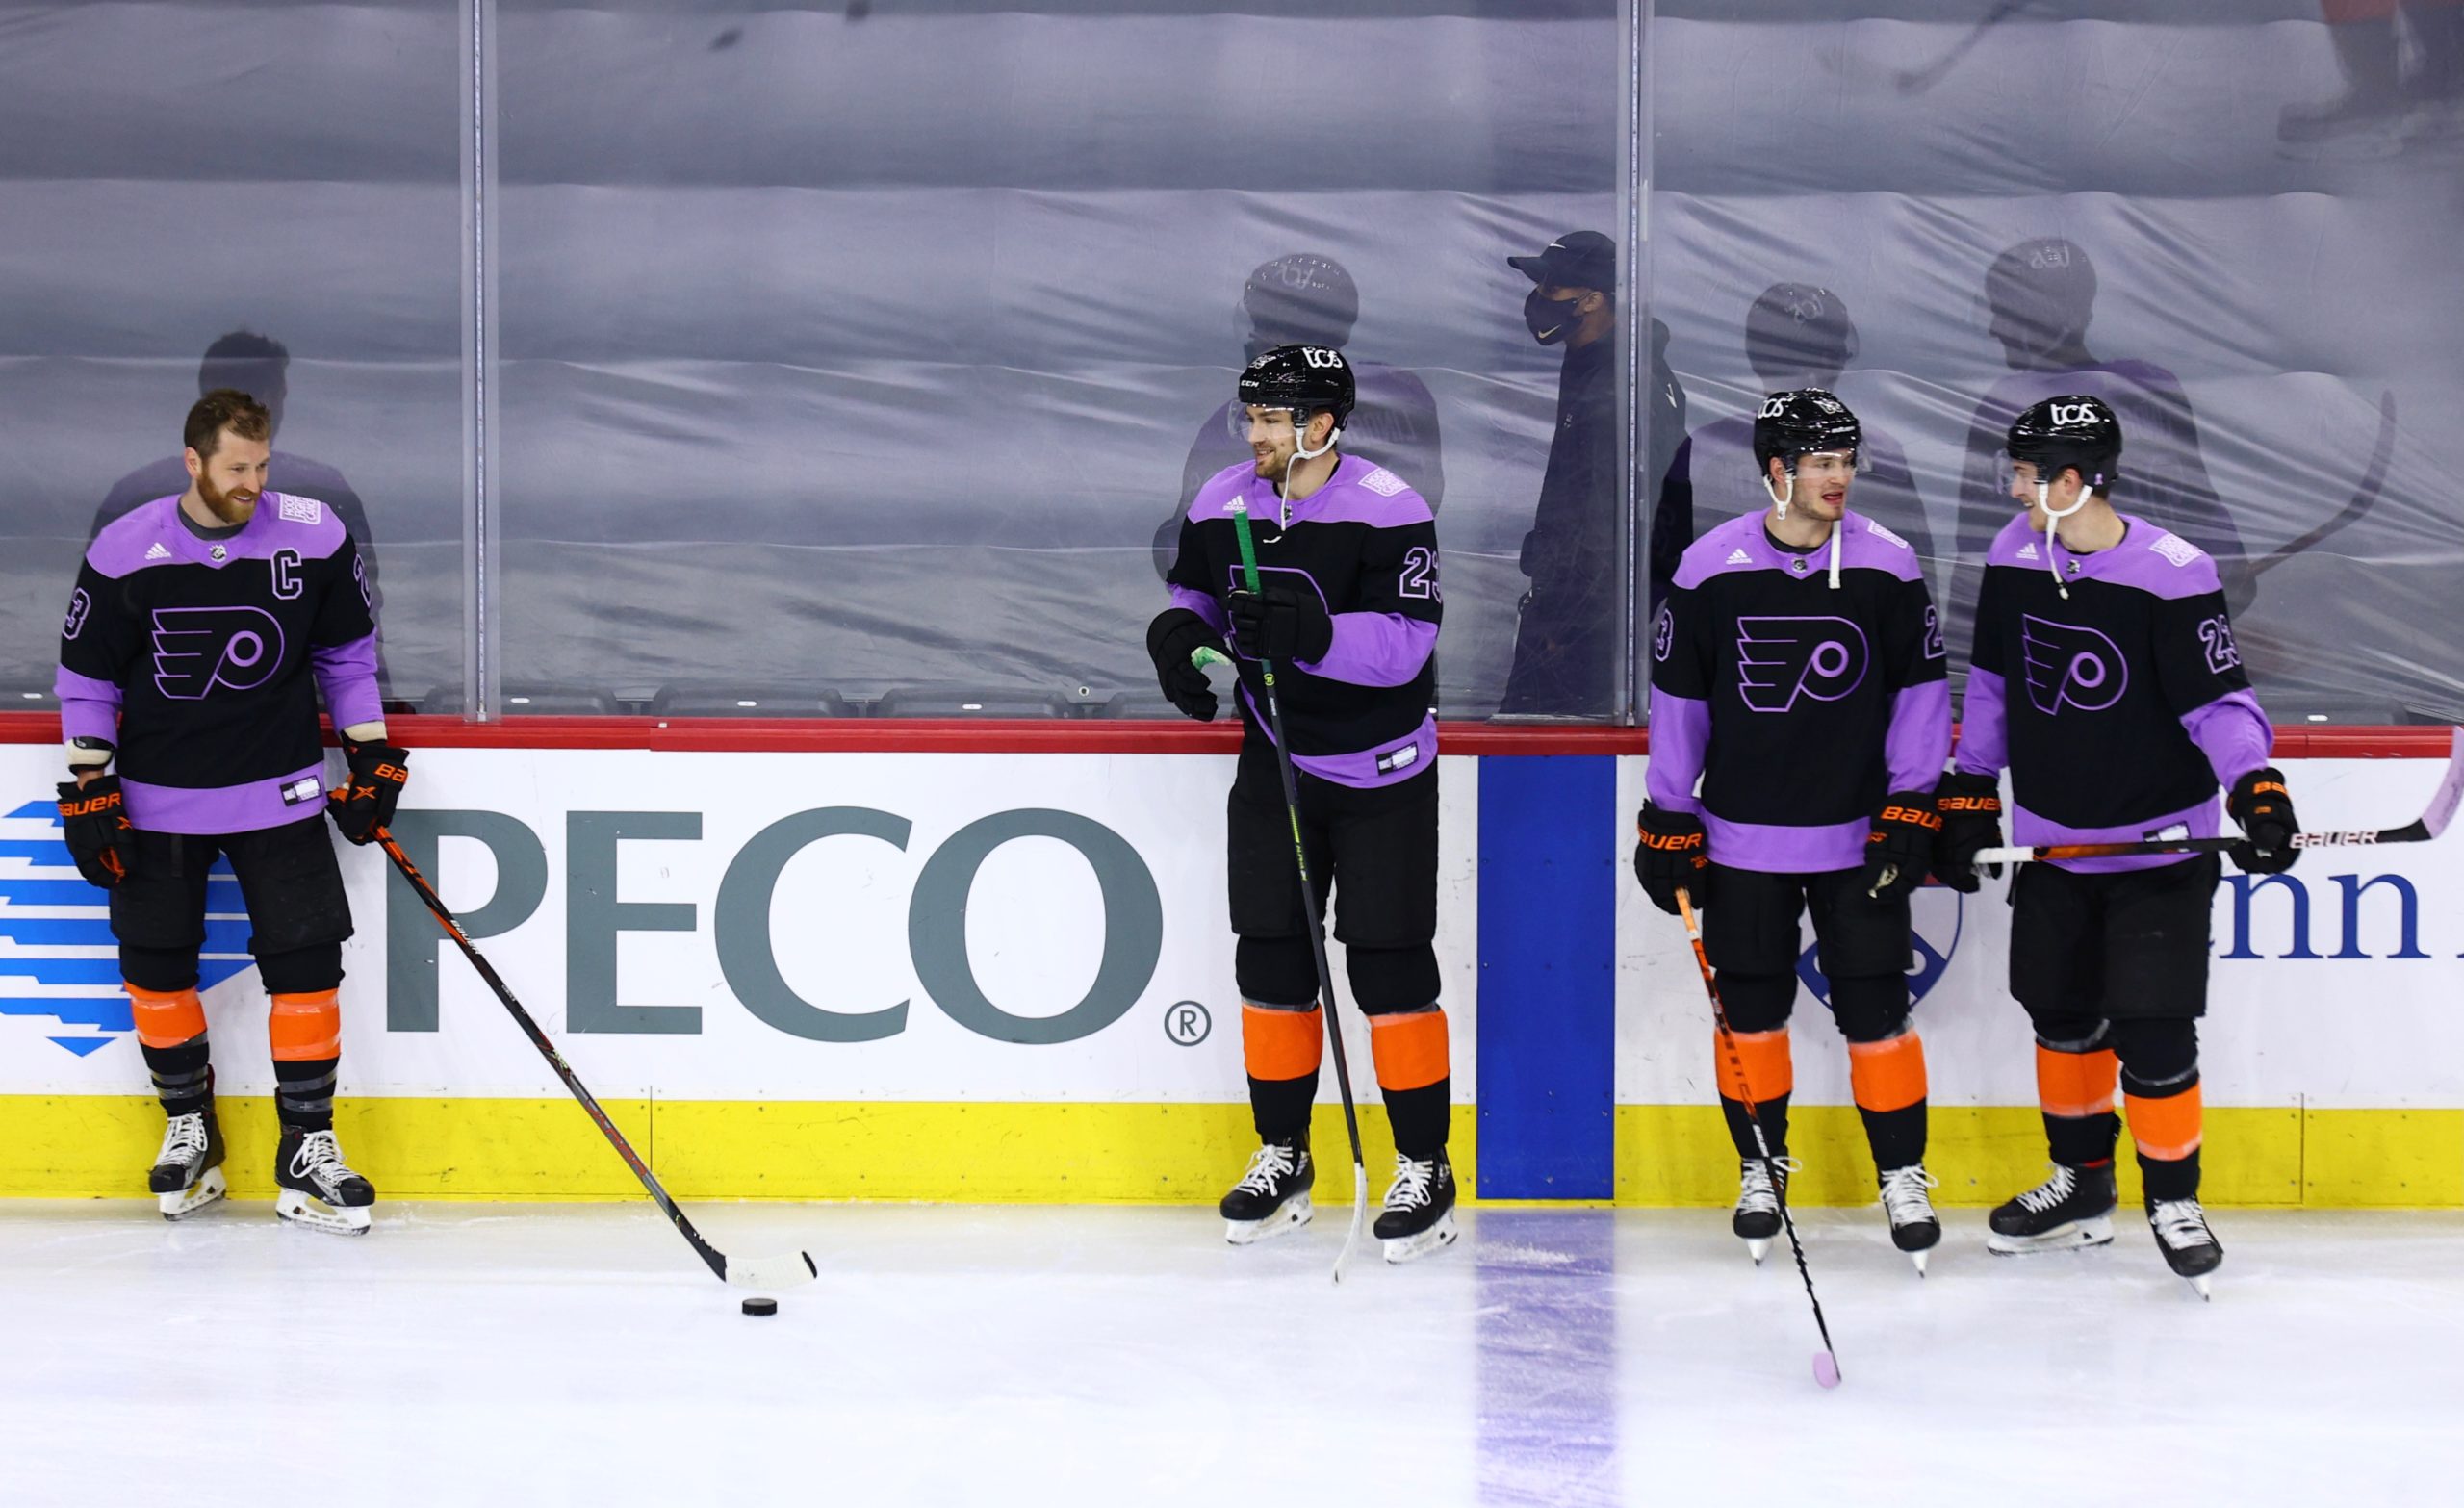 Oscar's Pro Stitch Hockey (@oscarspsh) • Instagram photos and videos